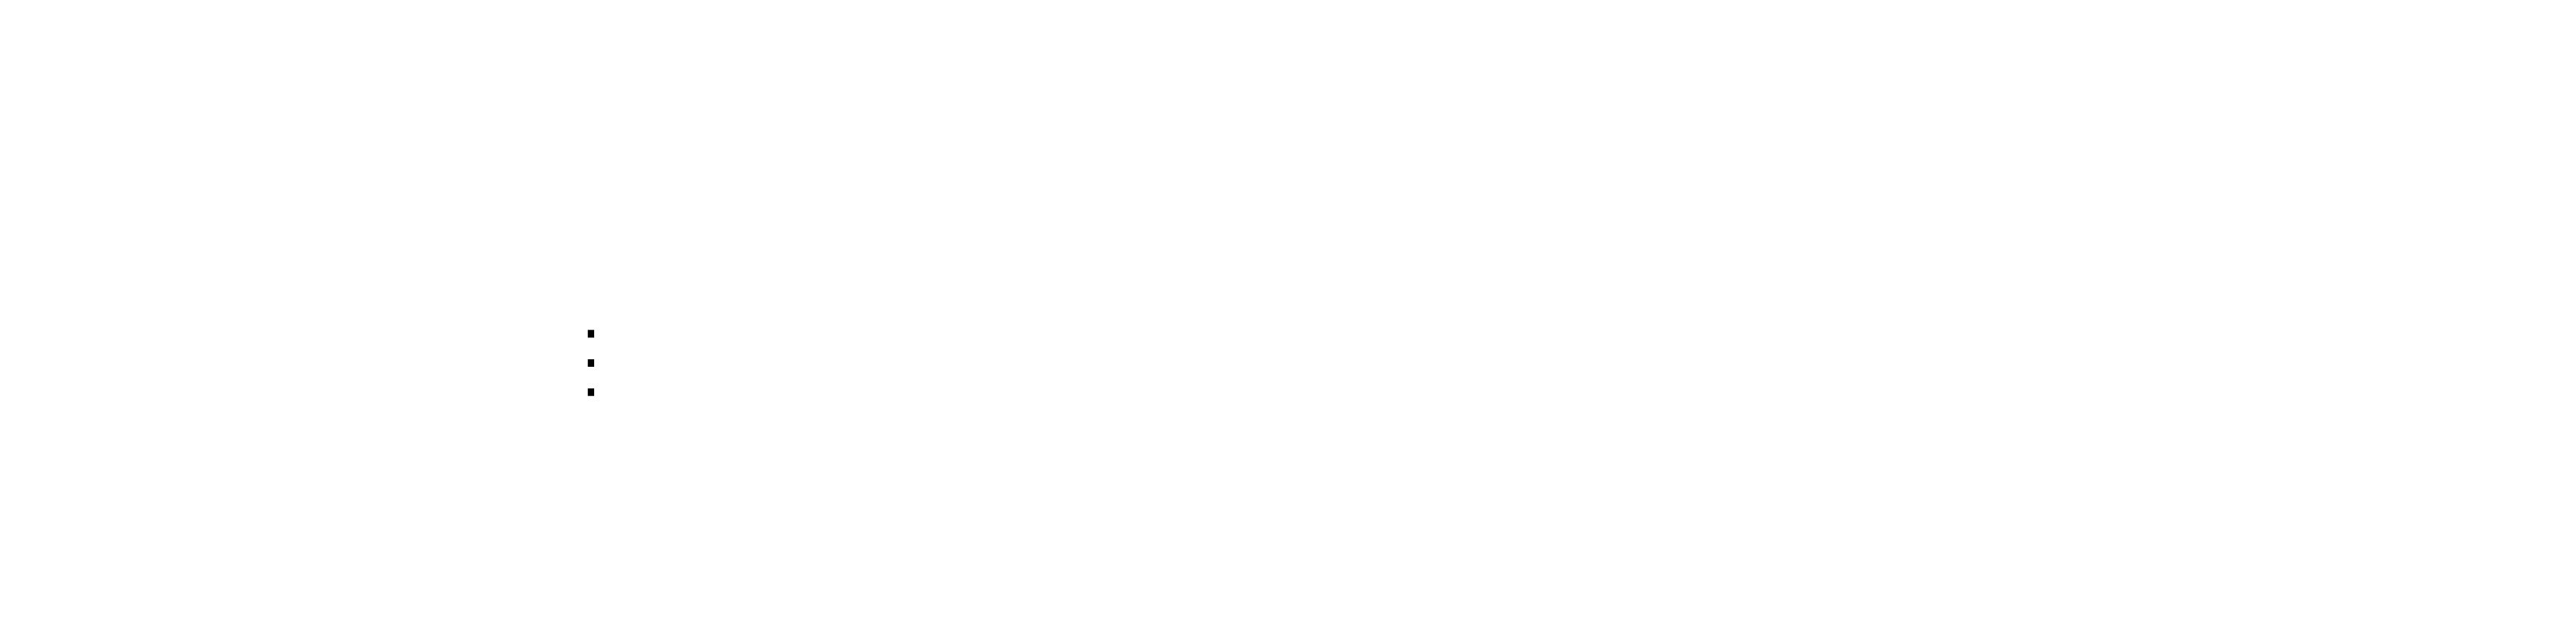 Heritage Church